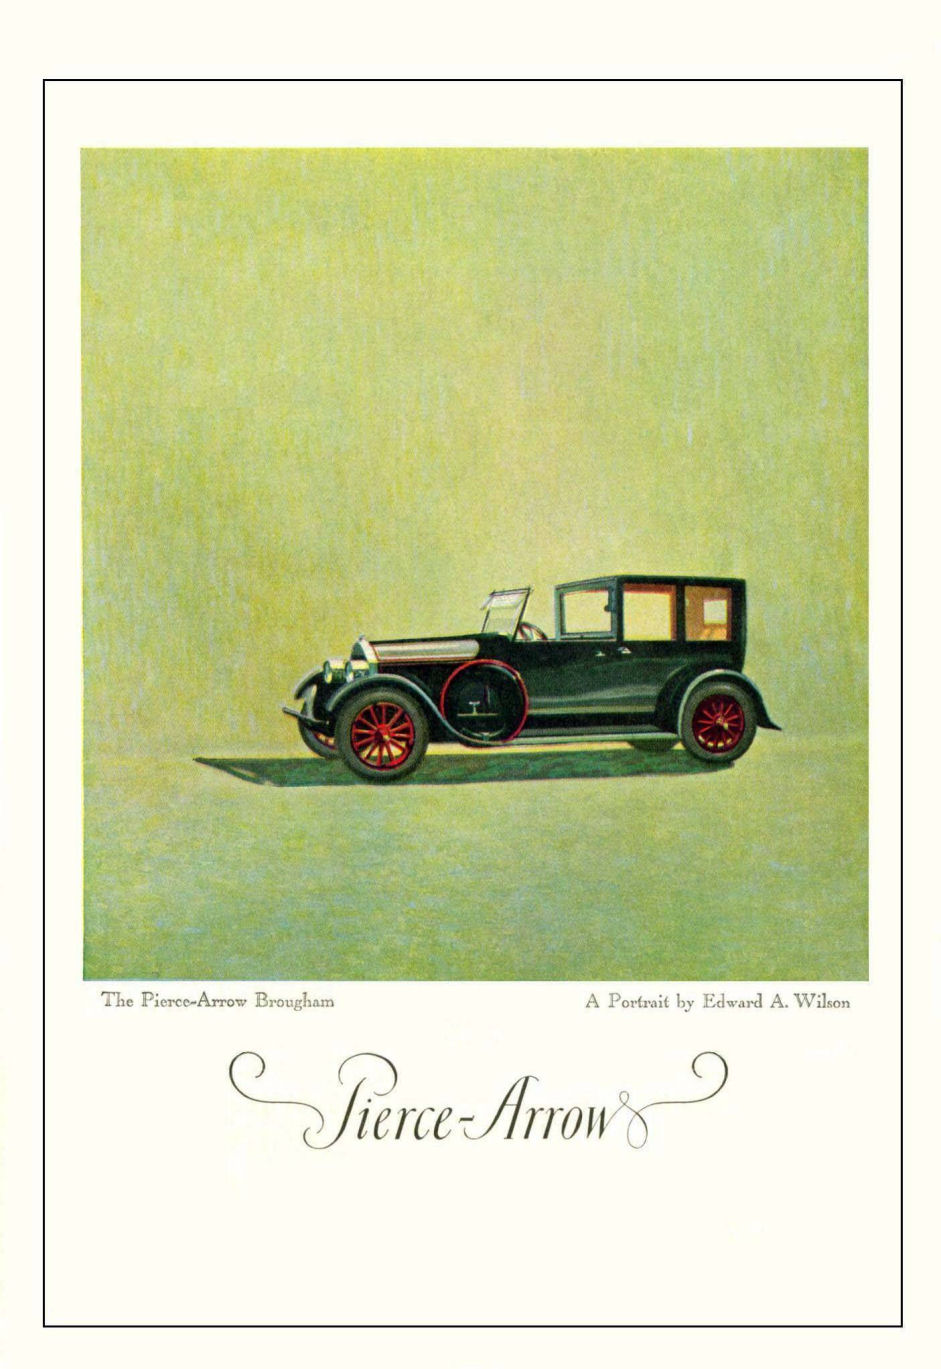 1921 American Auto Advertising